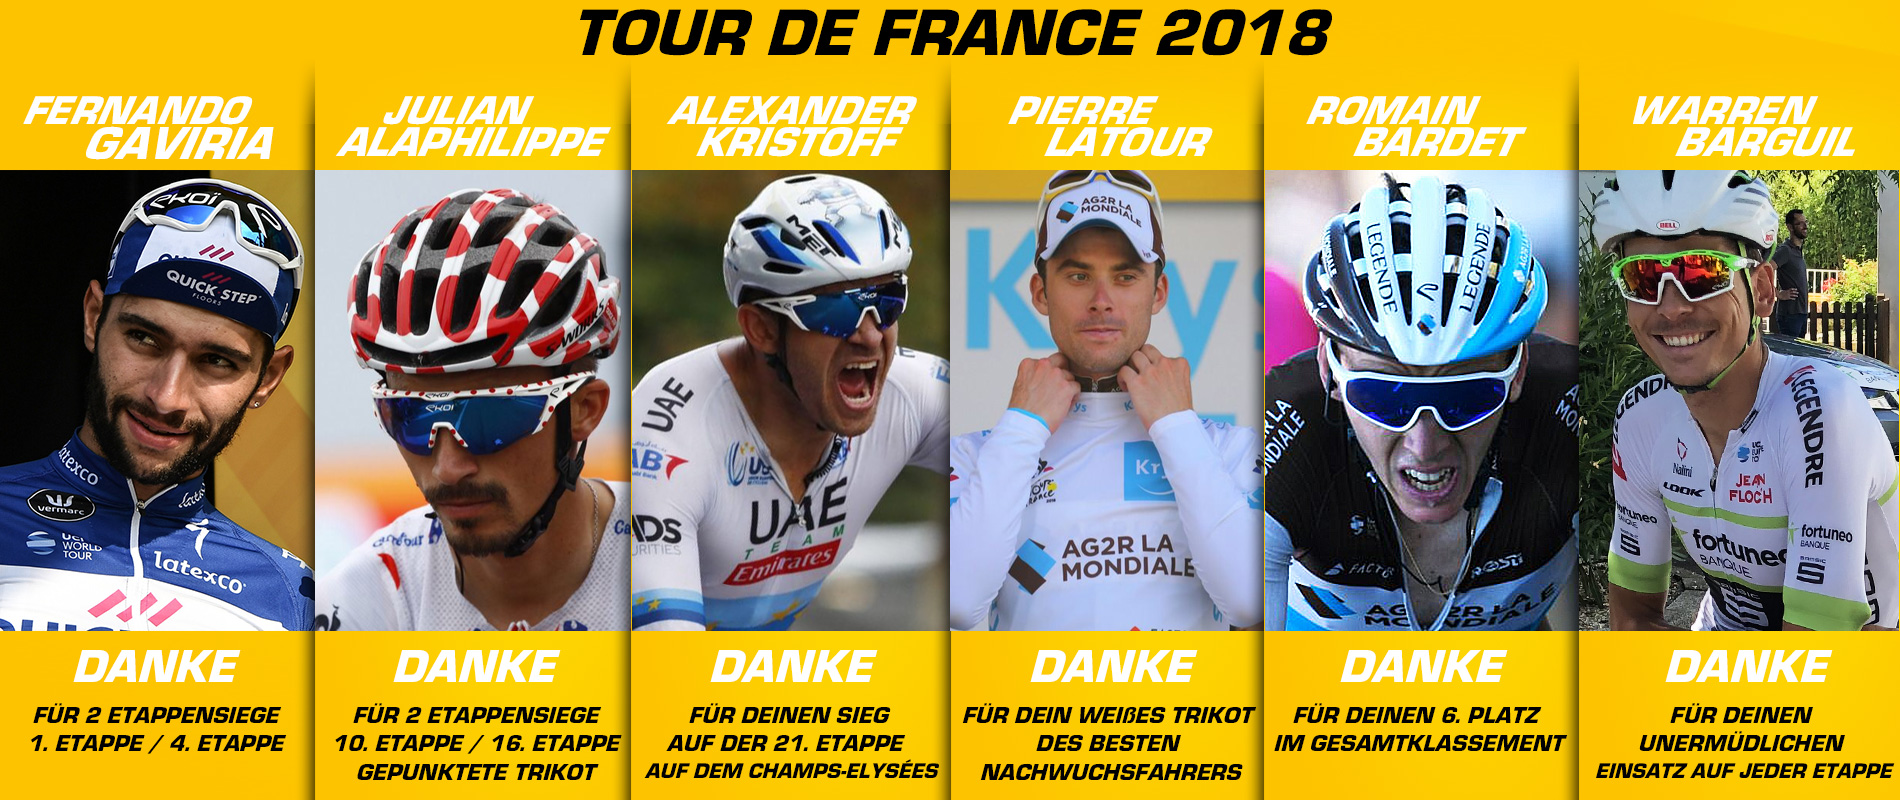 Tour de France 2018 Merci EKOI